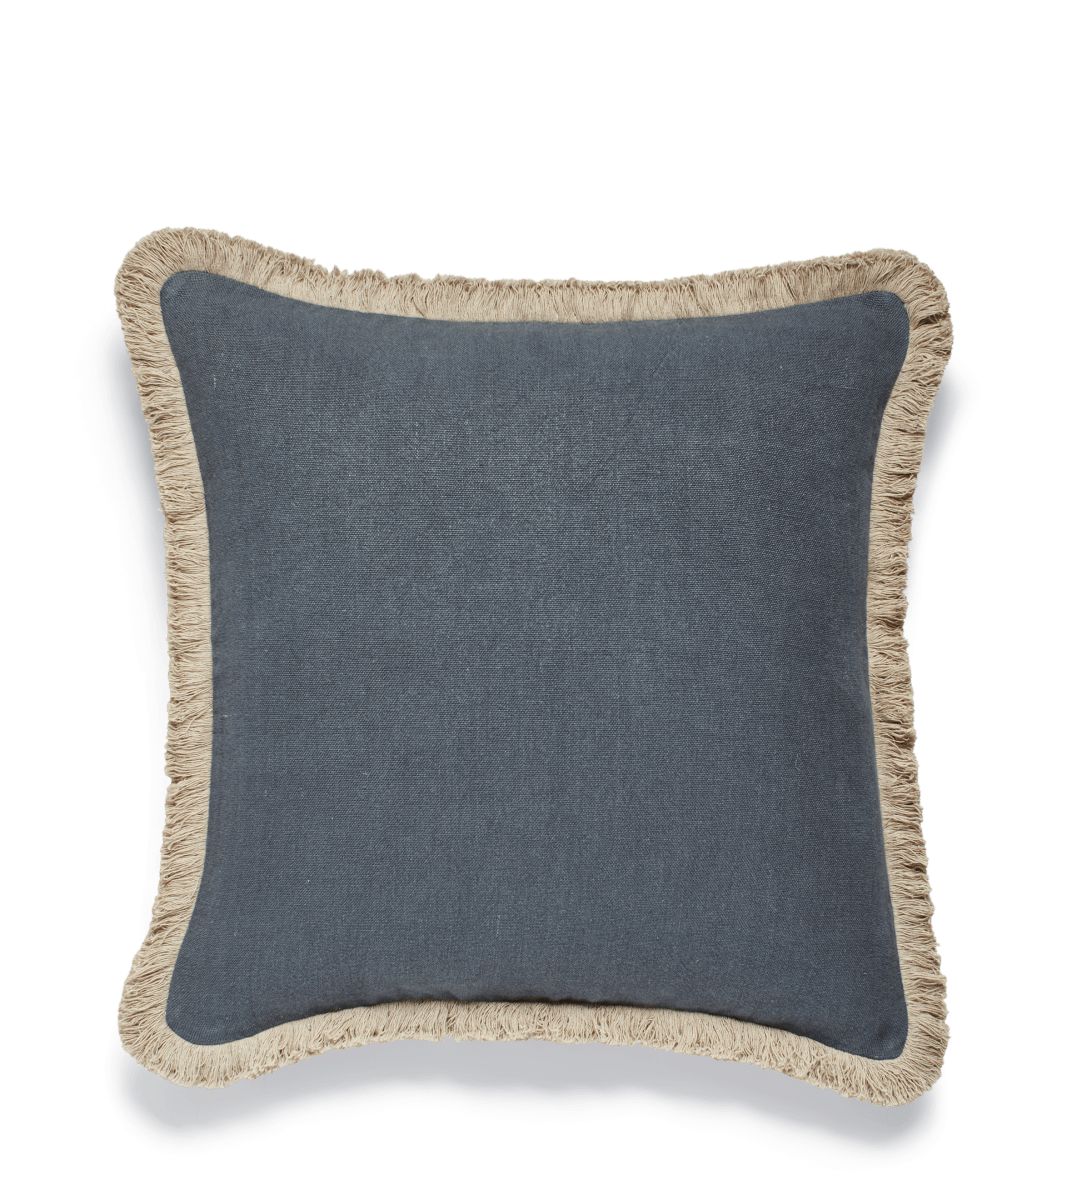 Stonewashed Linen Pillow Cover with Fringing - Petrol | OKA US